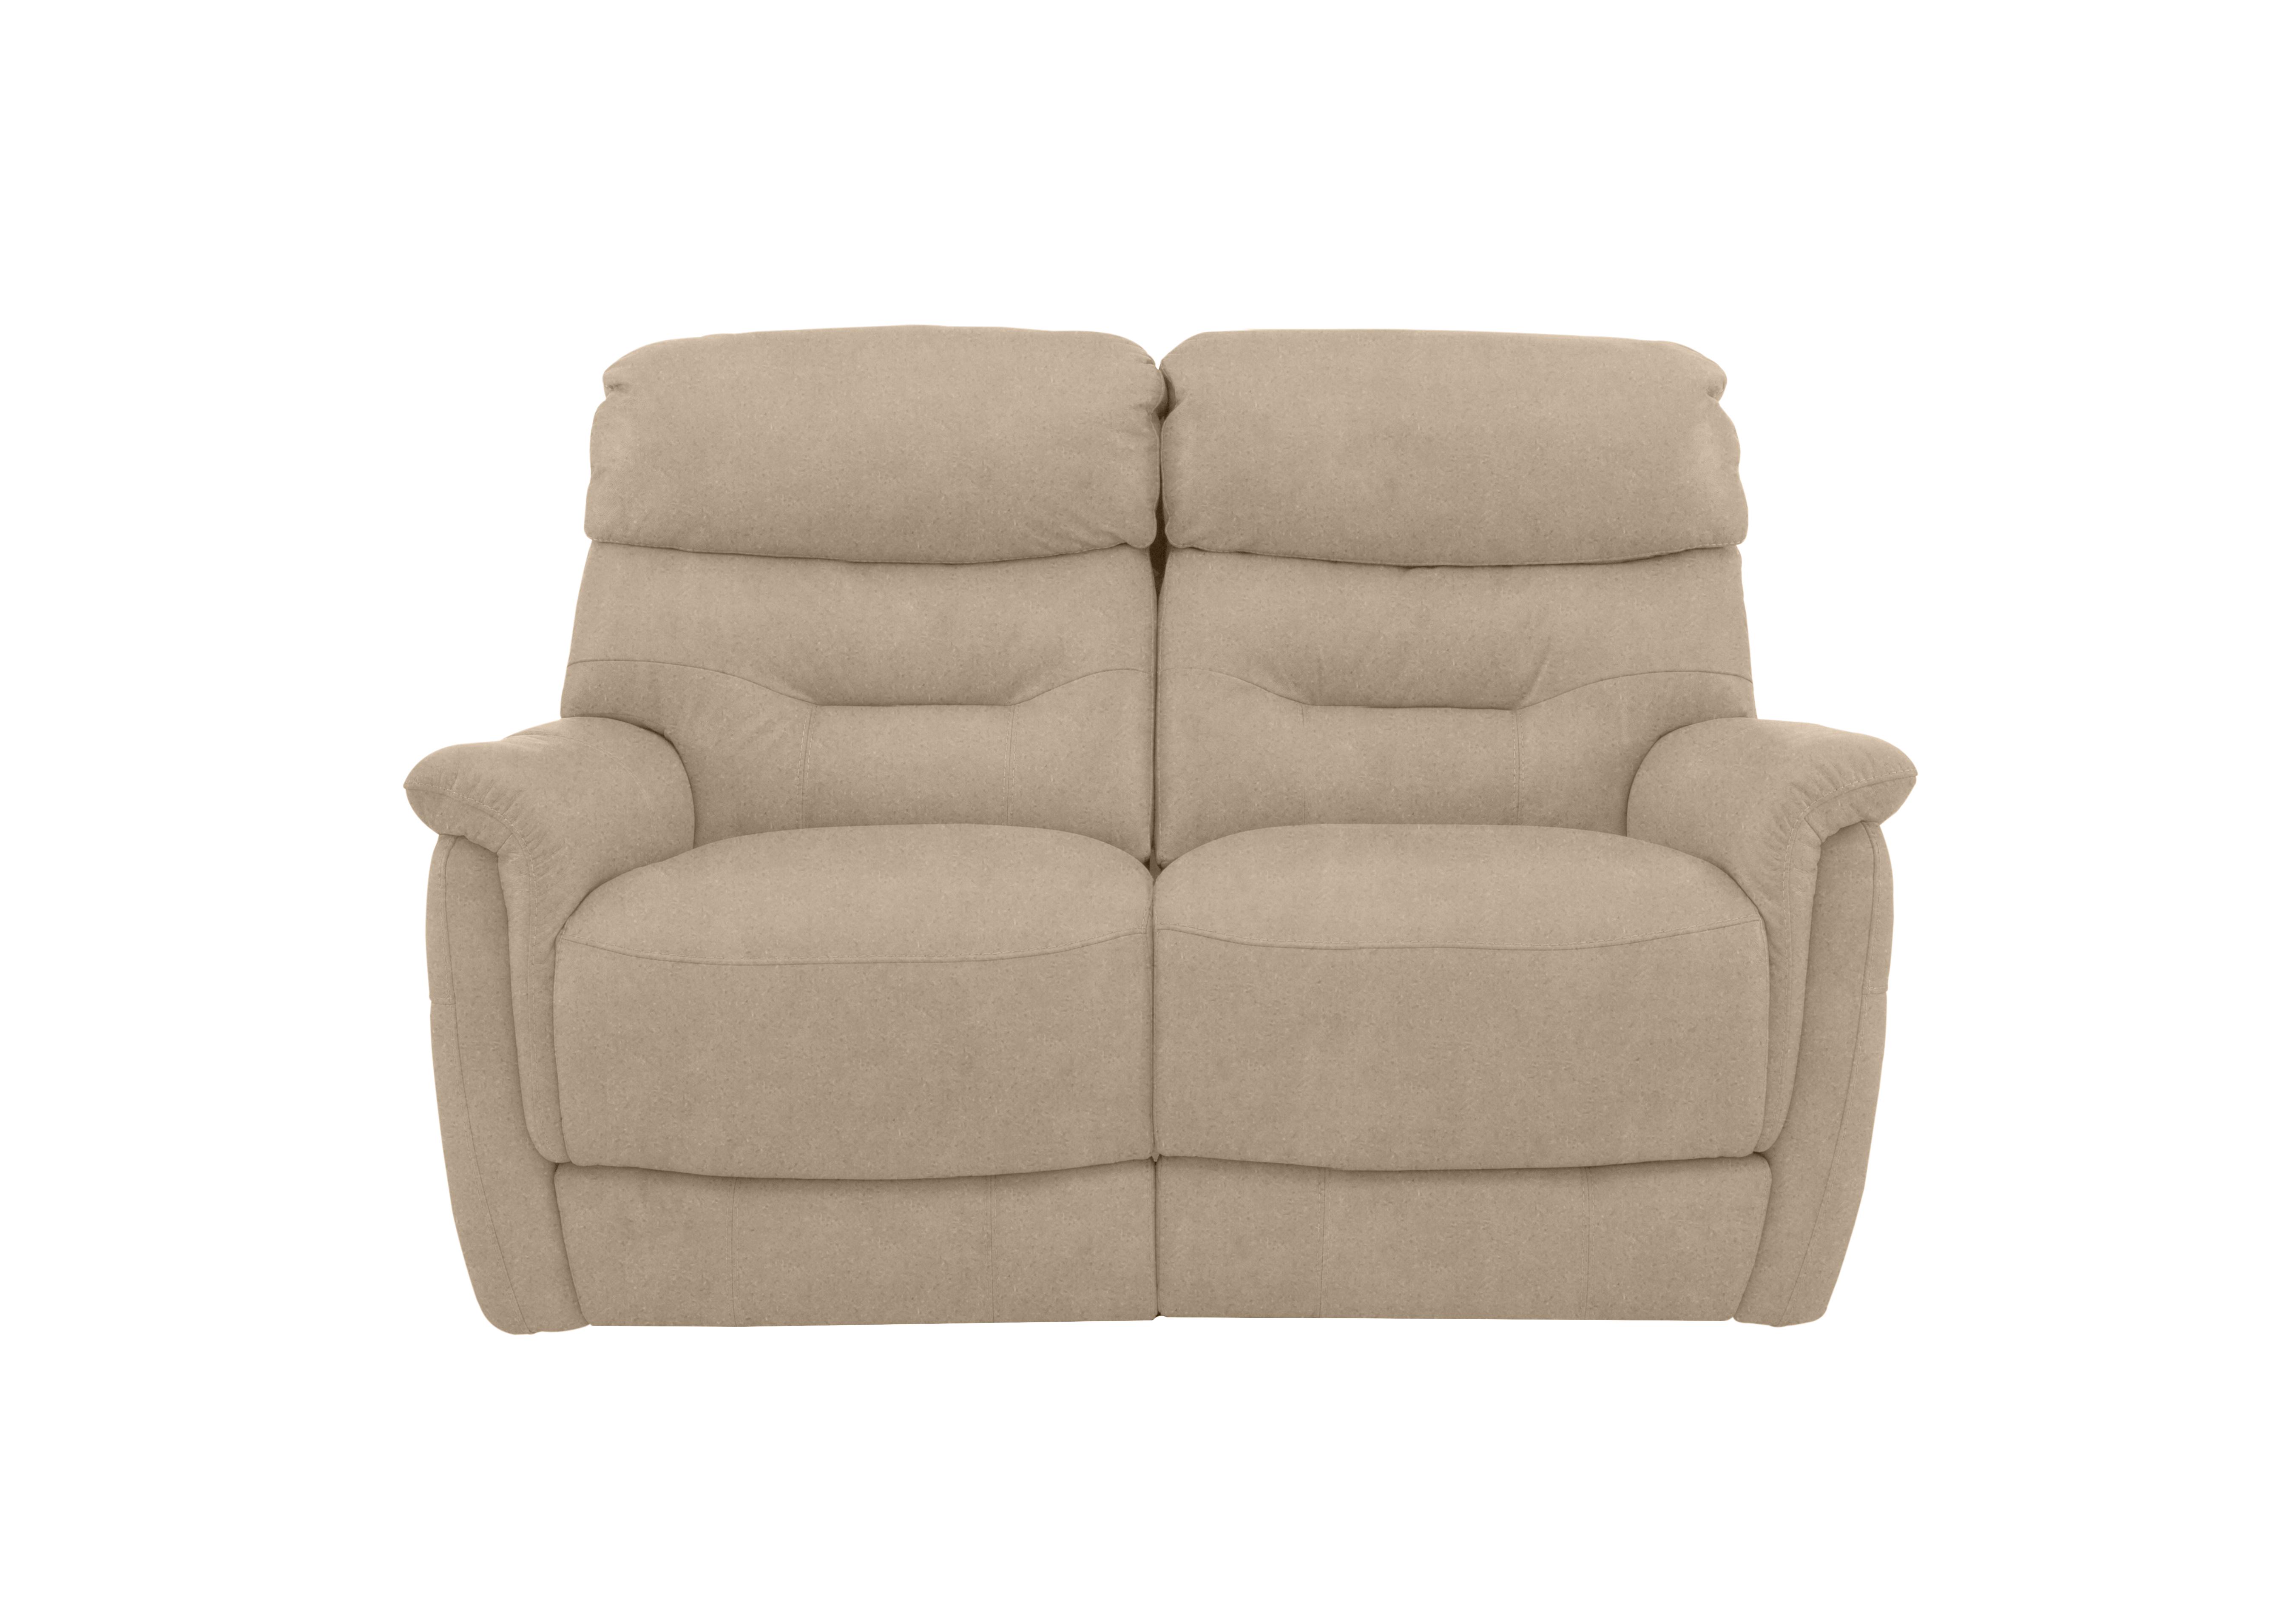 Chicago 2 Seater Fabric Sofa in Bfa-Blj-R20 Bisque on Furniture Village